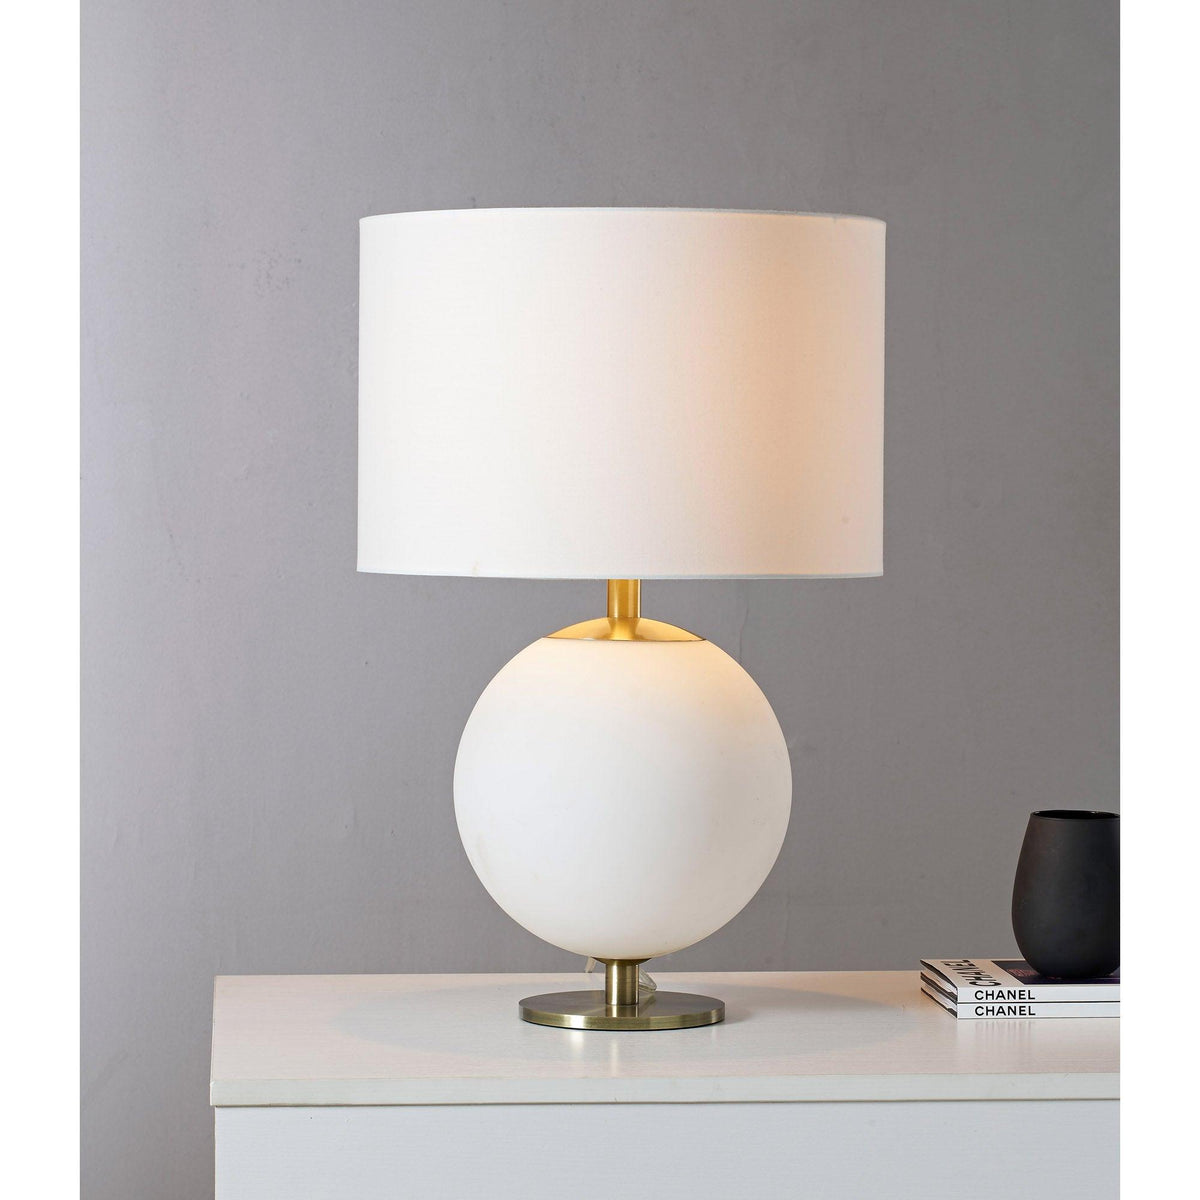 Renwil - Pasca Table Lamp - LPT1234 | Montreal Lighting & Hardware